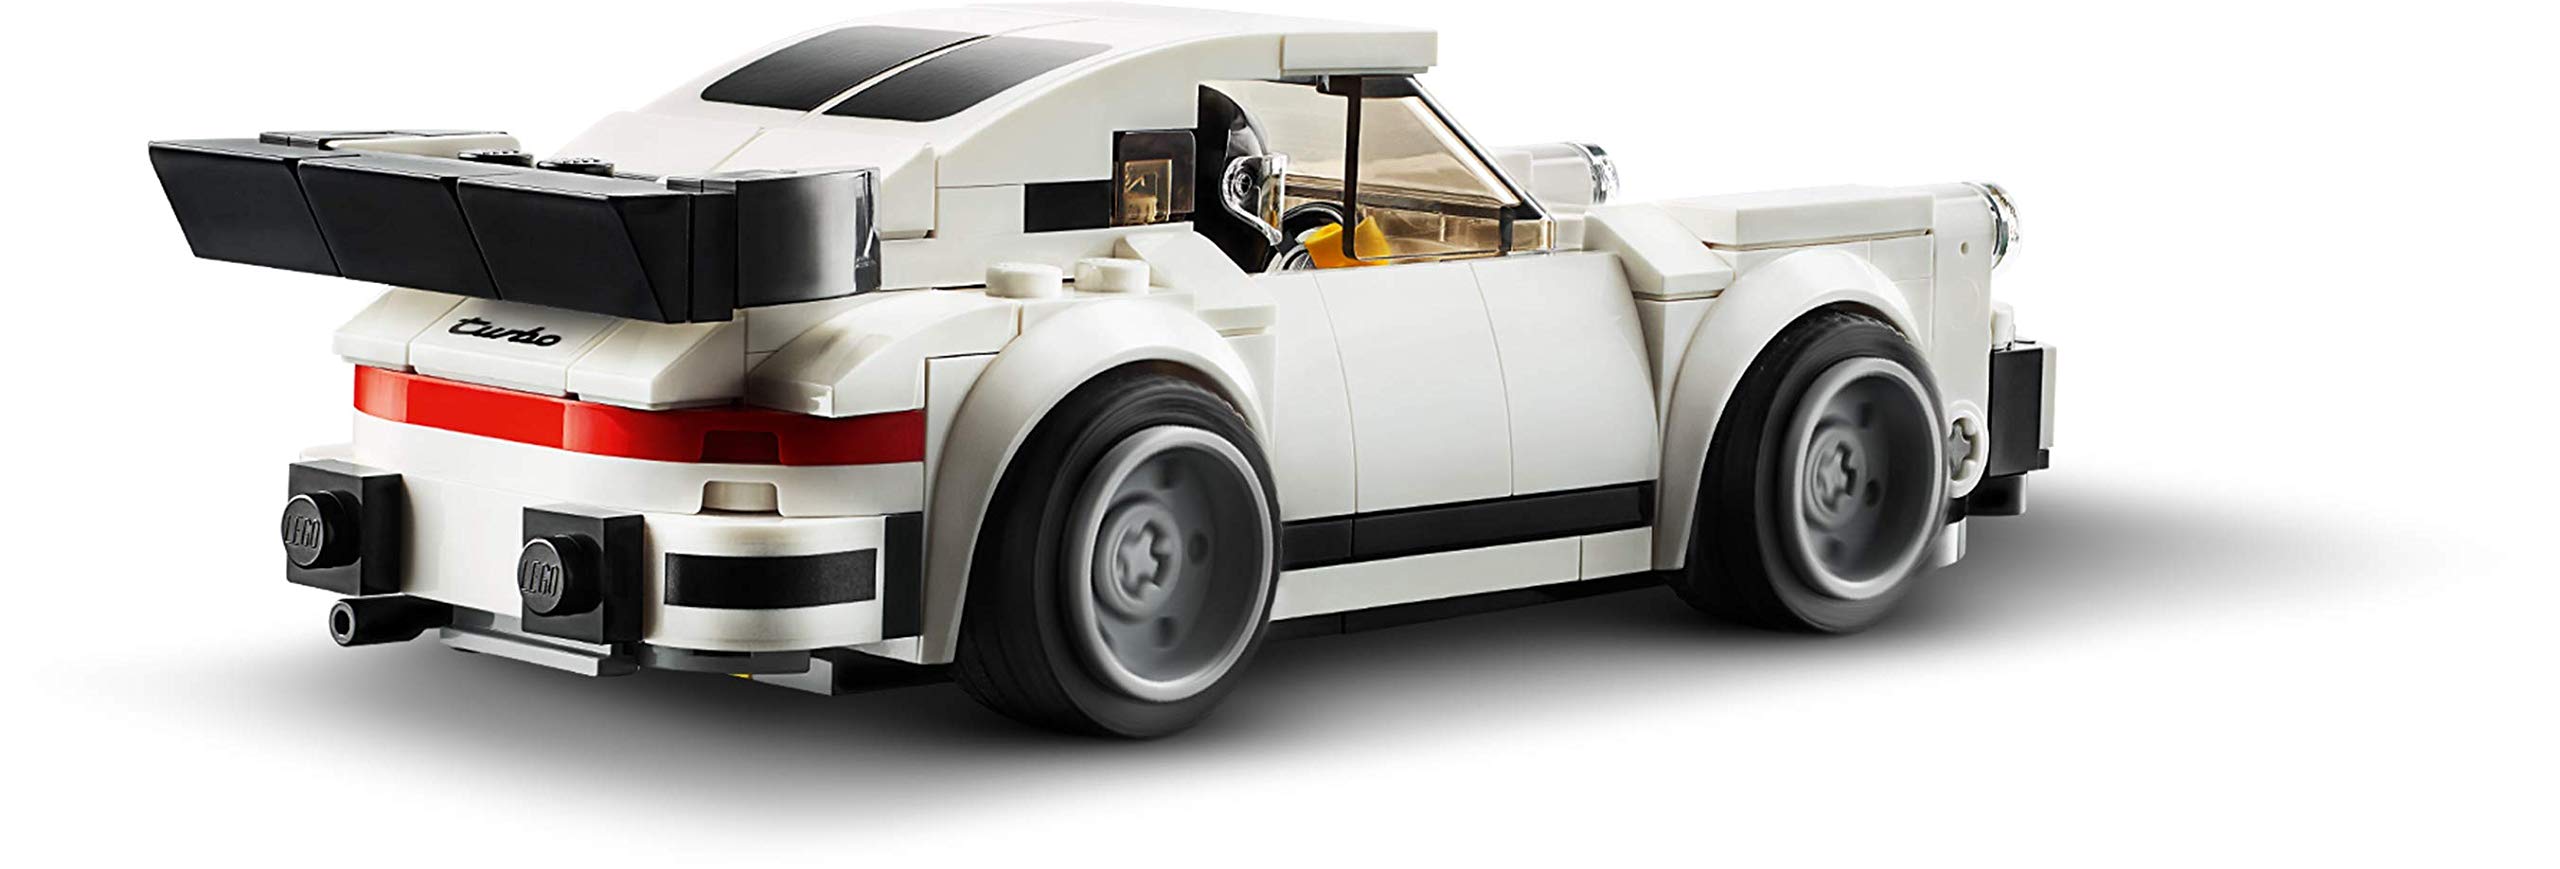 LEGO Speed Champions 1974 Porsche 911 Turbo 3.0 75895 Building Kit (180 Pieces)